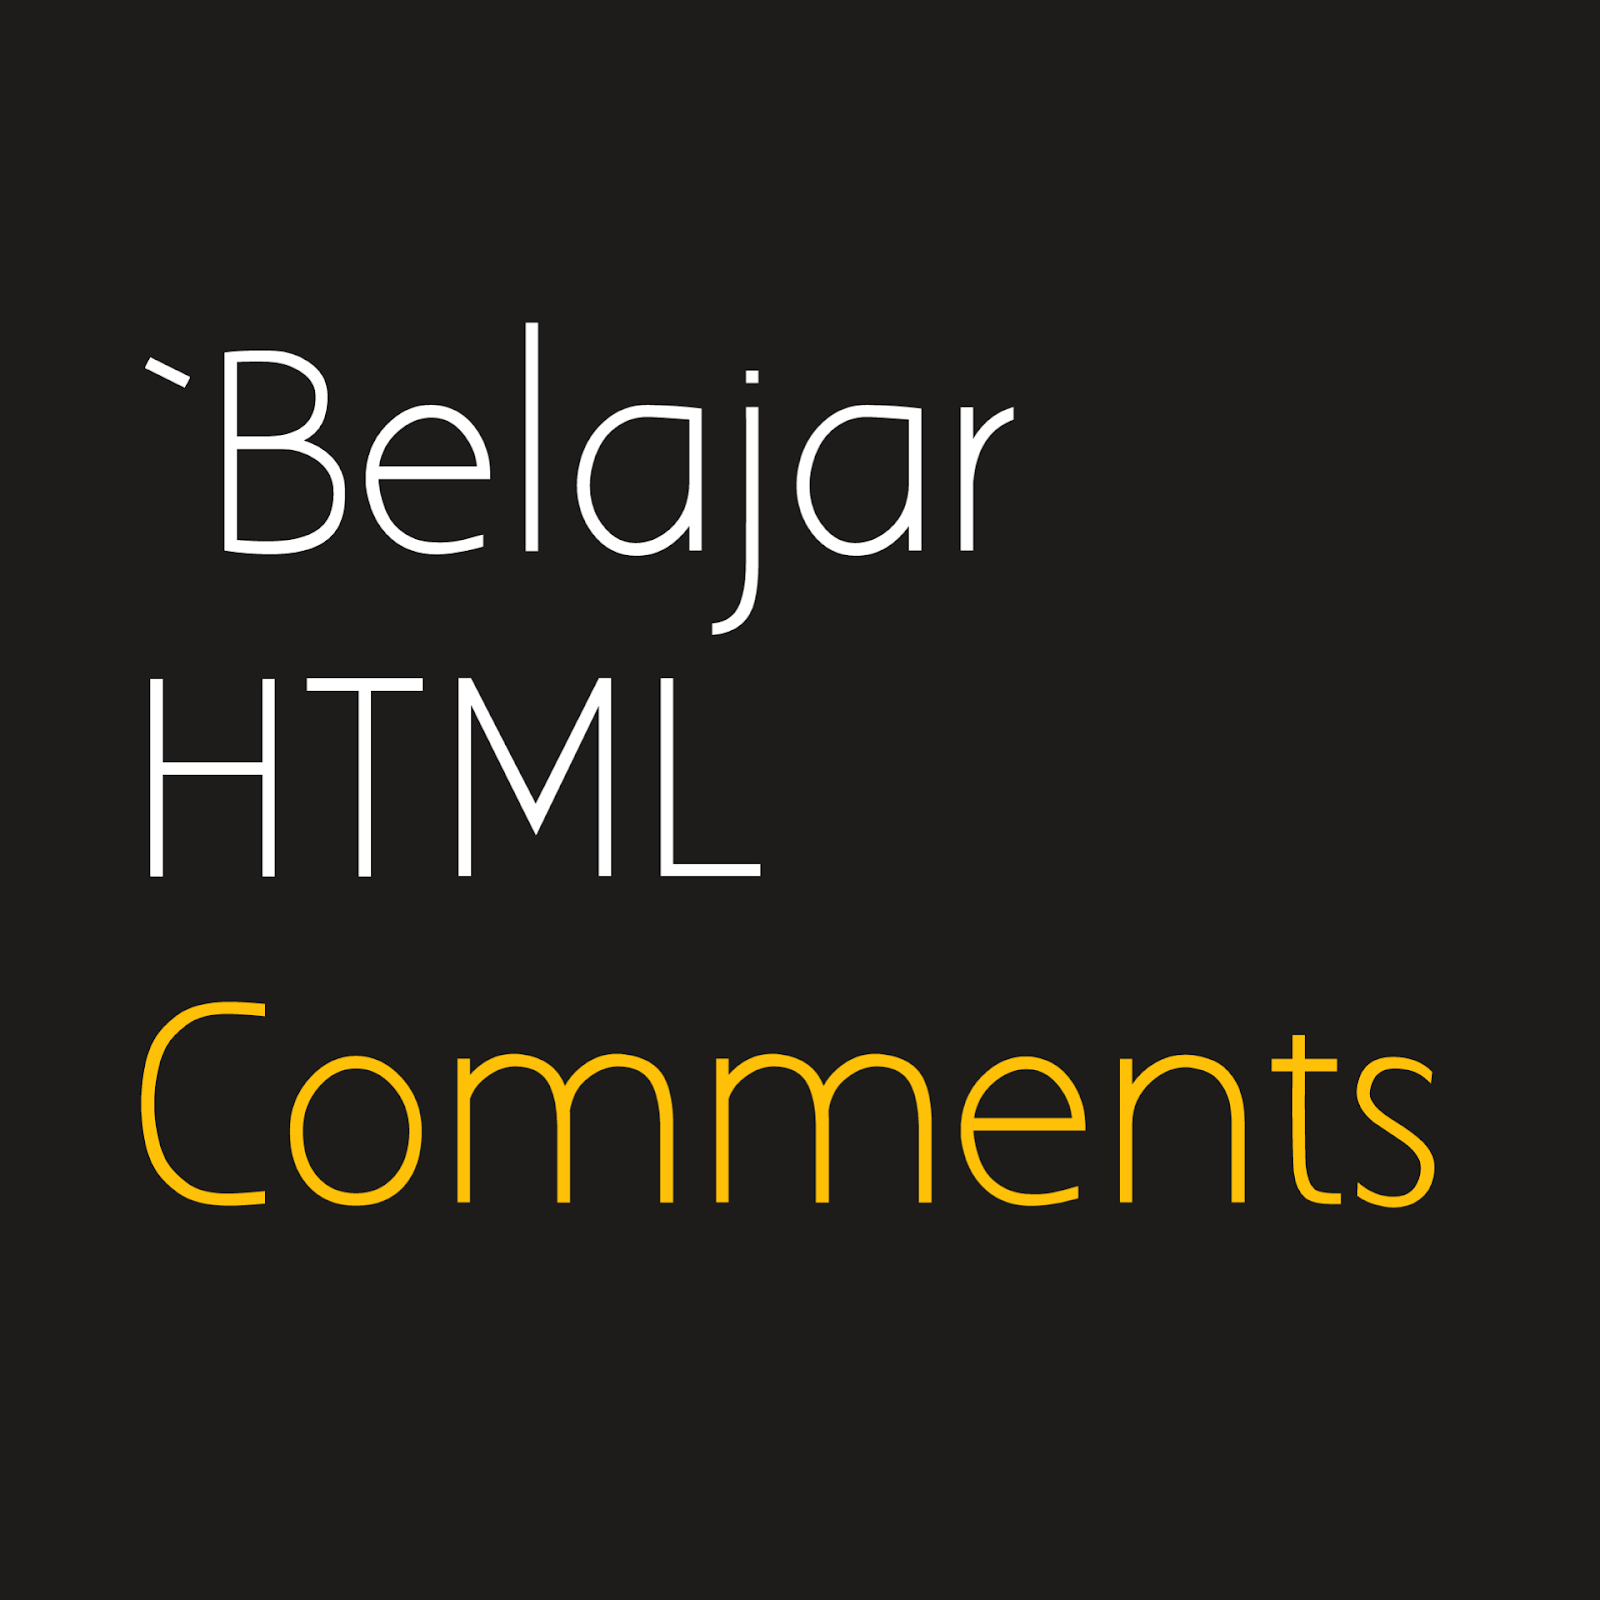 Belajar HTML Comments